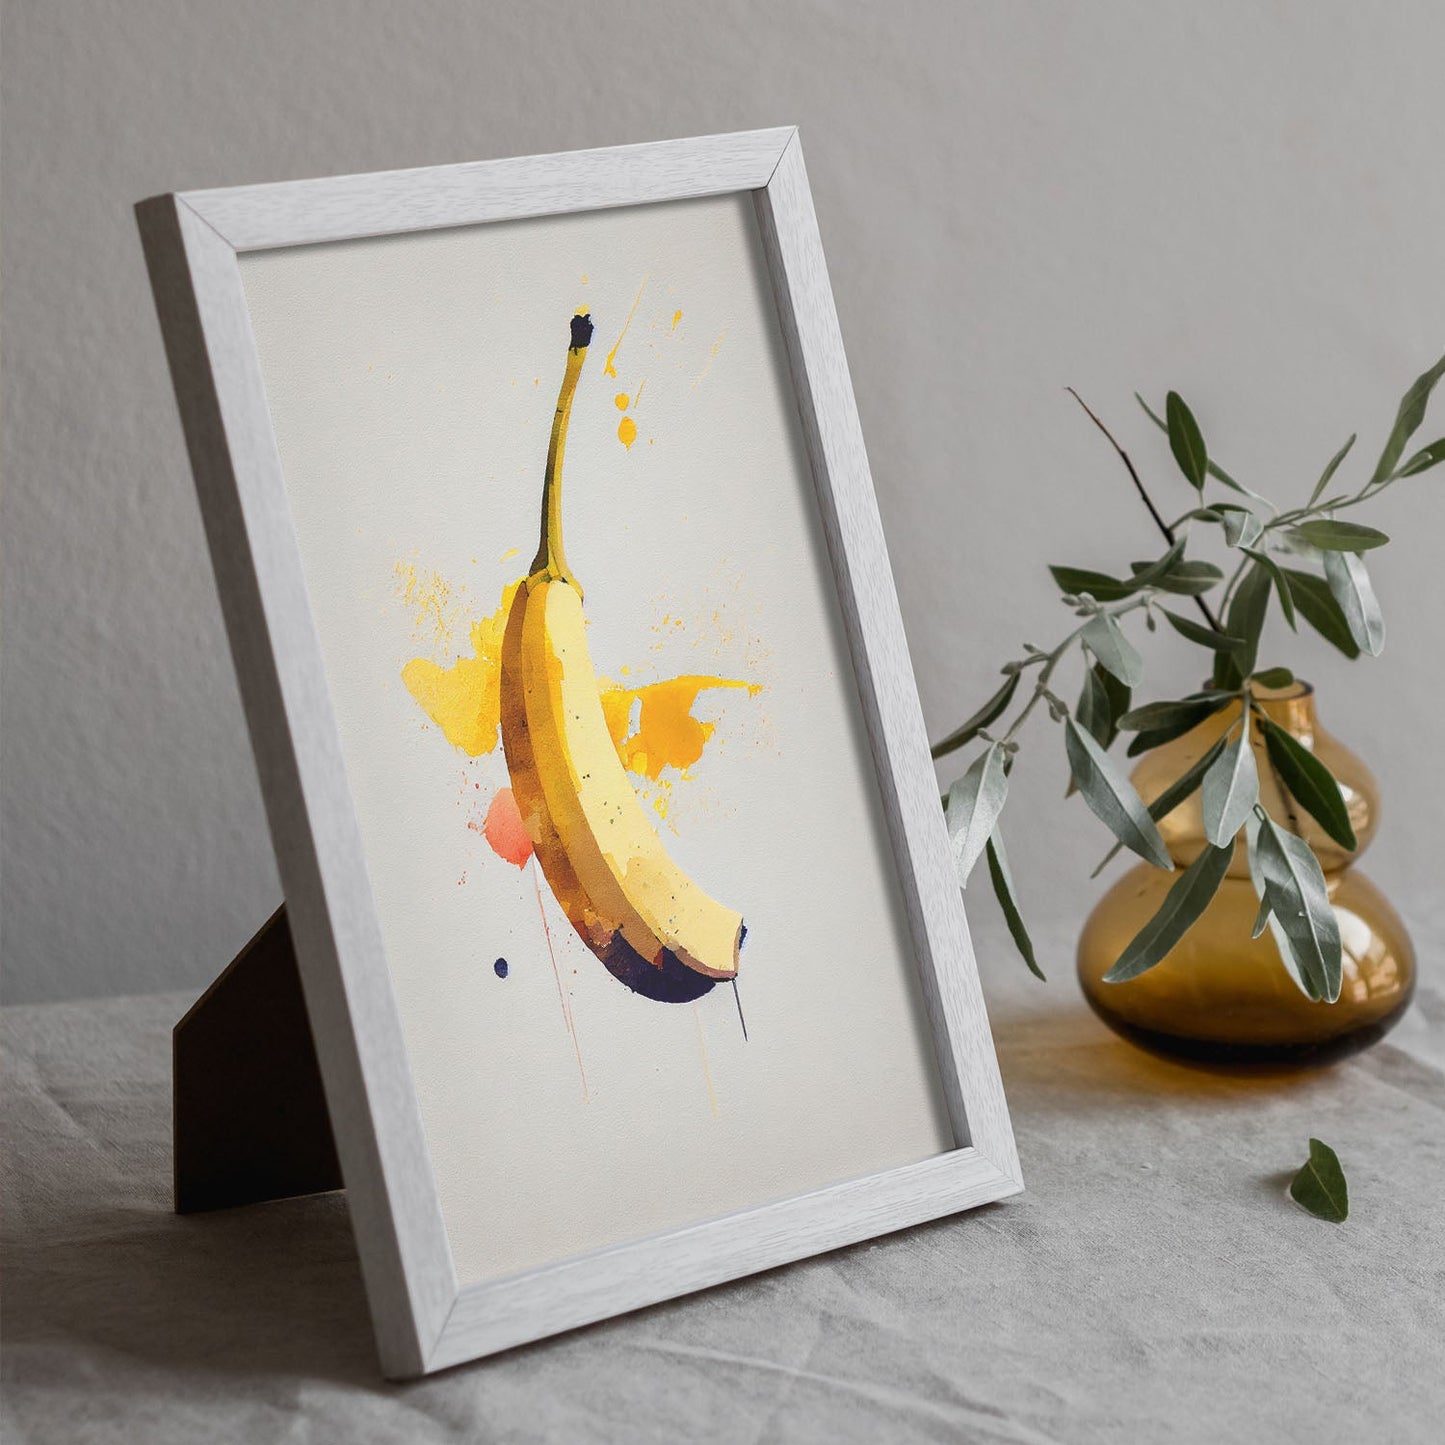 Nacnic minimalist Bananasplit. Aesthetic Wall Art Prints for Bedroom or Living Room Design.-Artwork-Nacnic-A4-Sin Marco-Nacnic Estudio SL